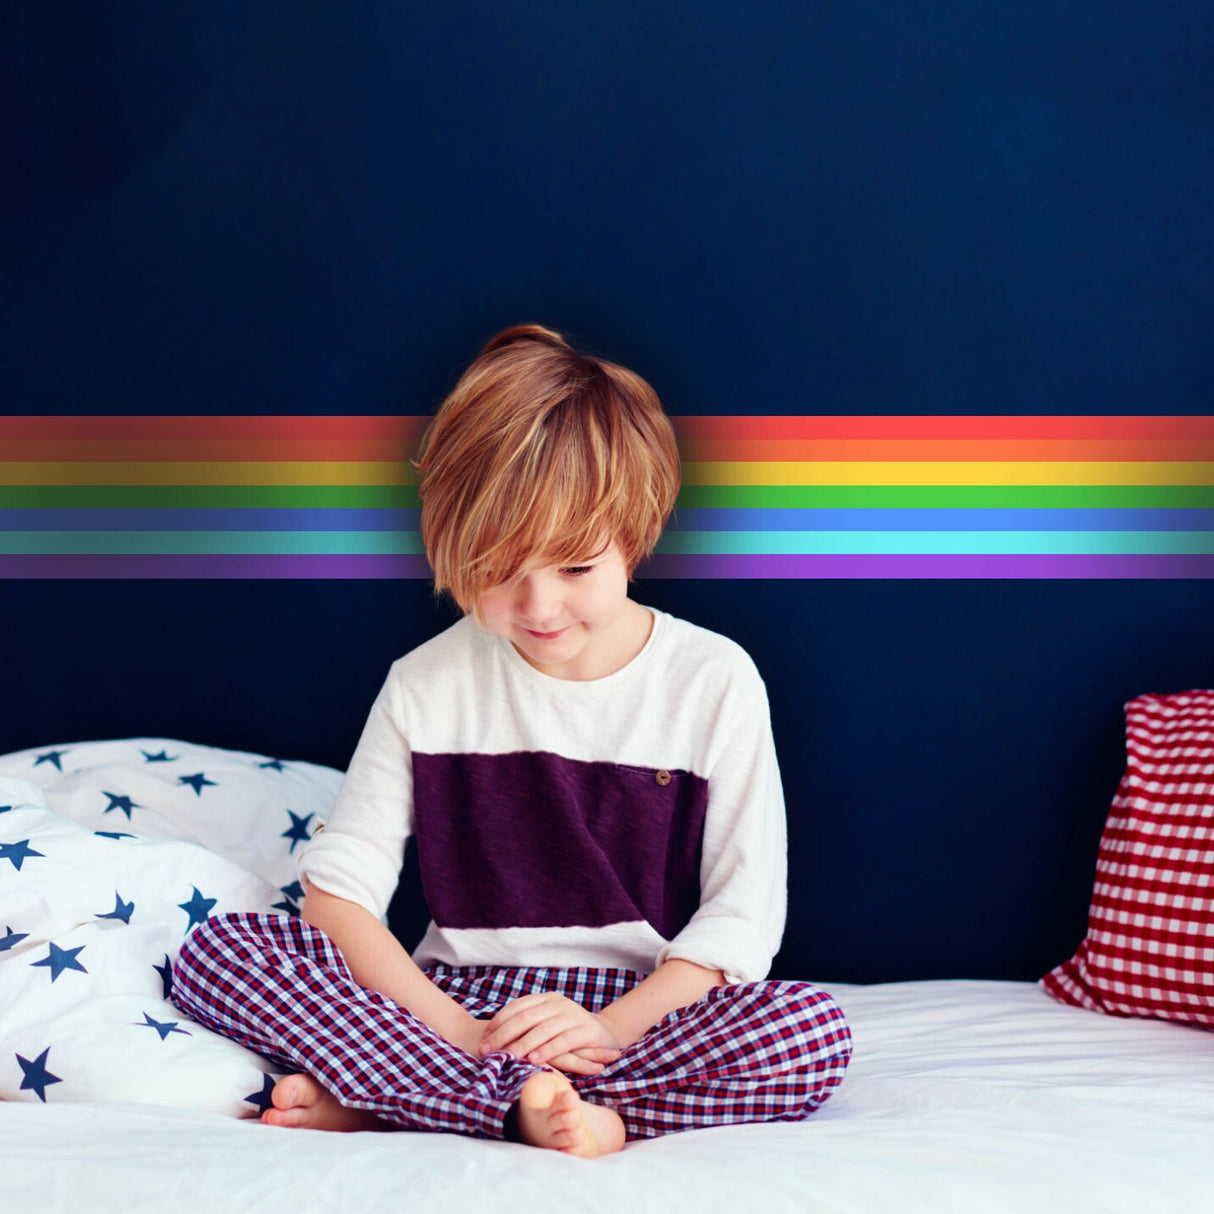 Rainbow Stripe Sticker - Birthday Party Border Strip Vinyl Decal Decoration For Nursery Baby Kid